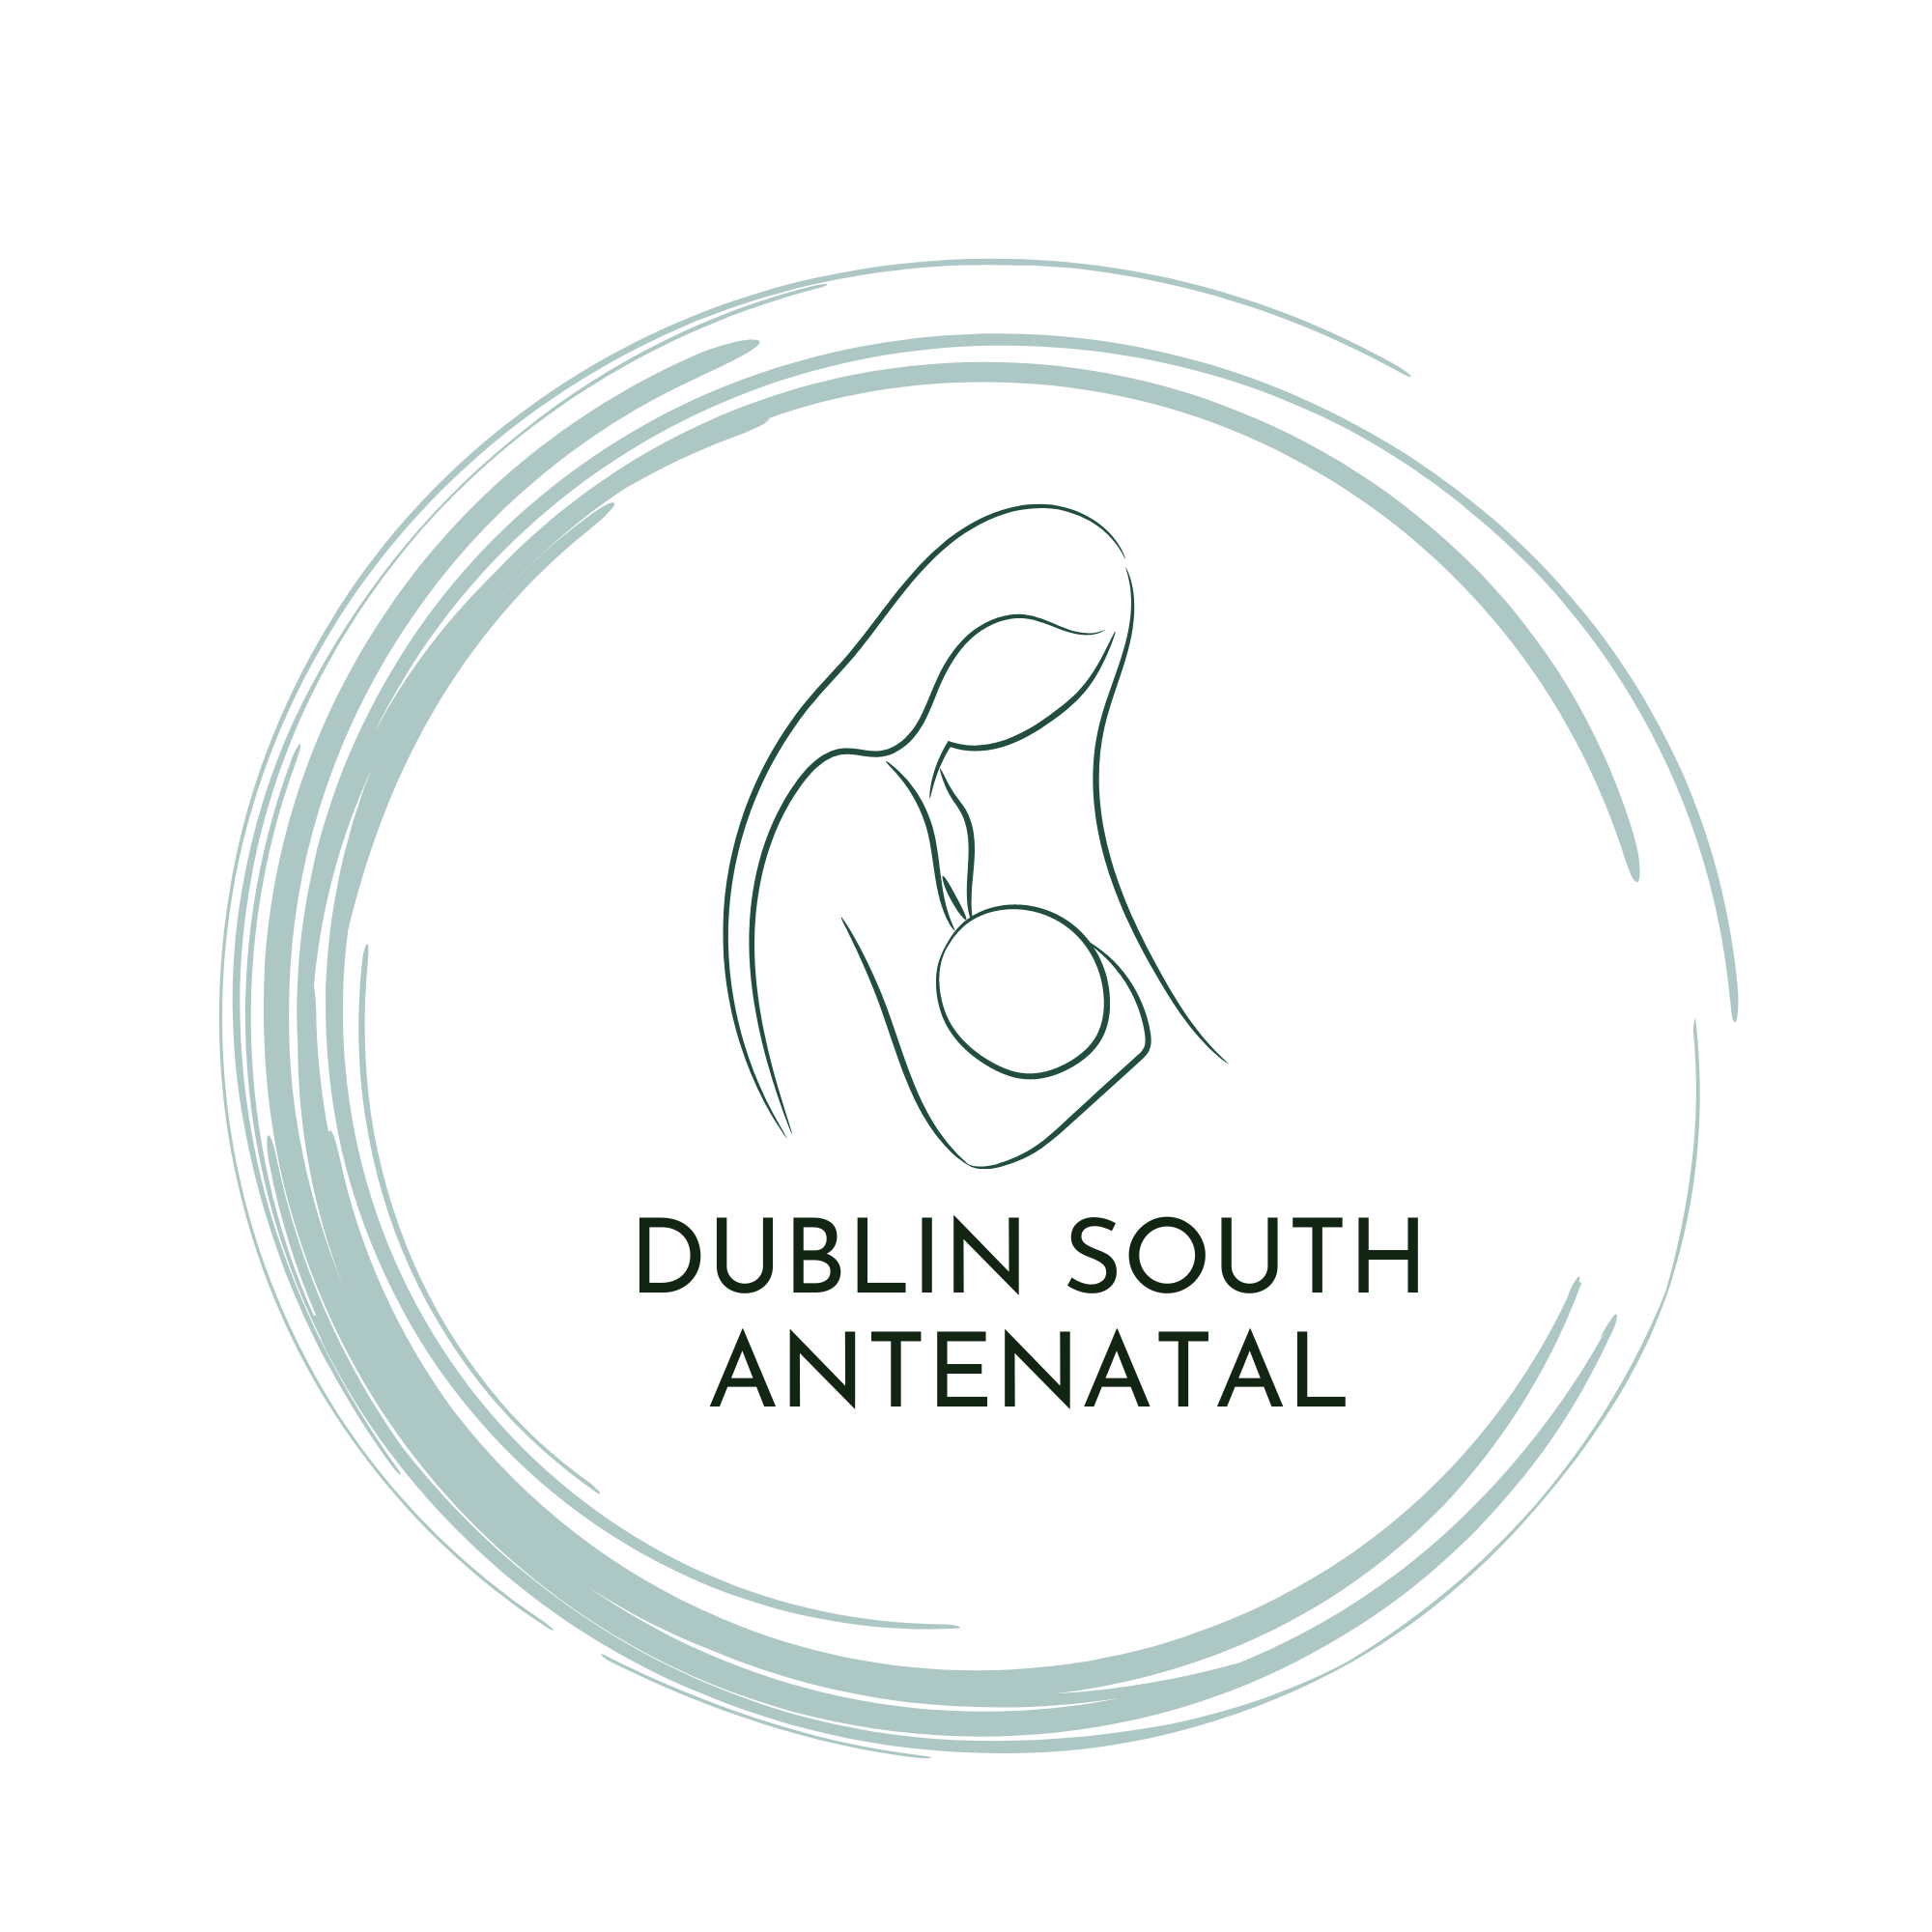 Dublin South Antenatal